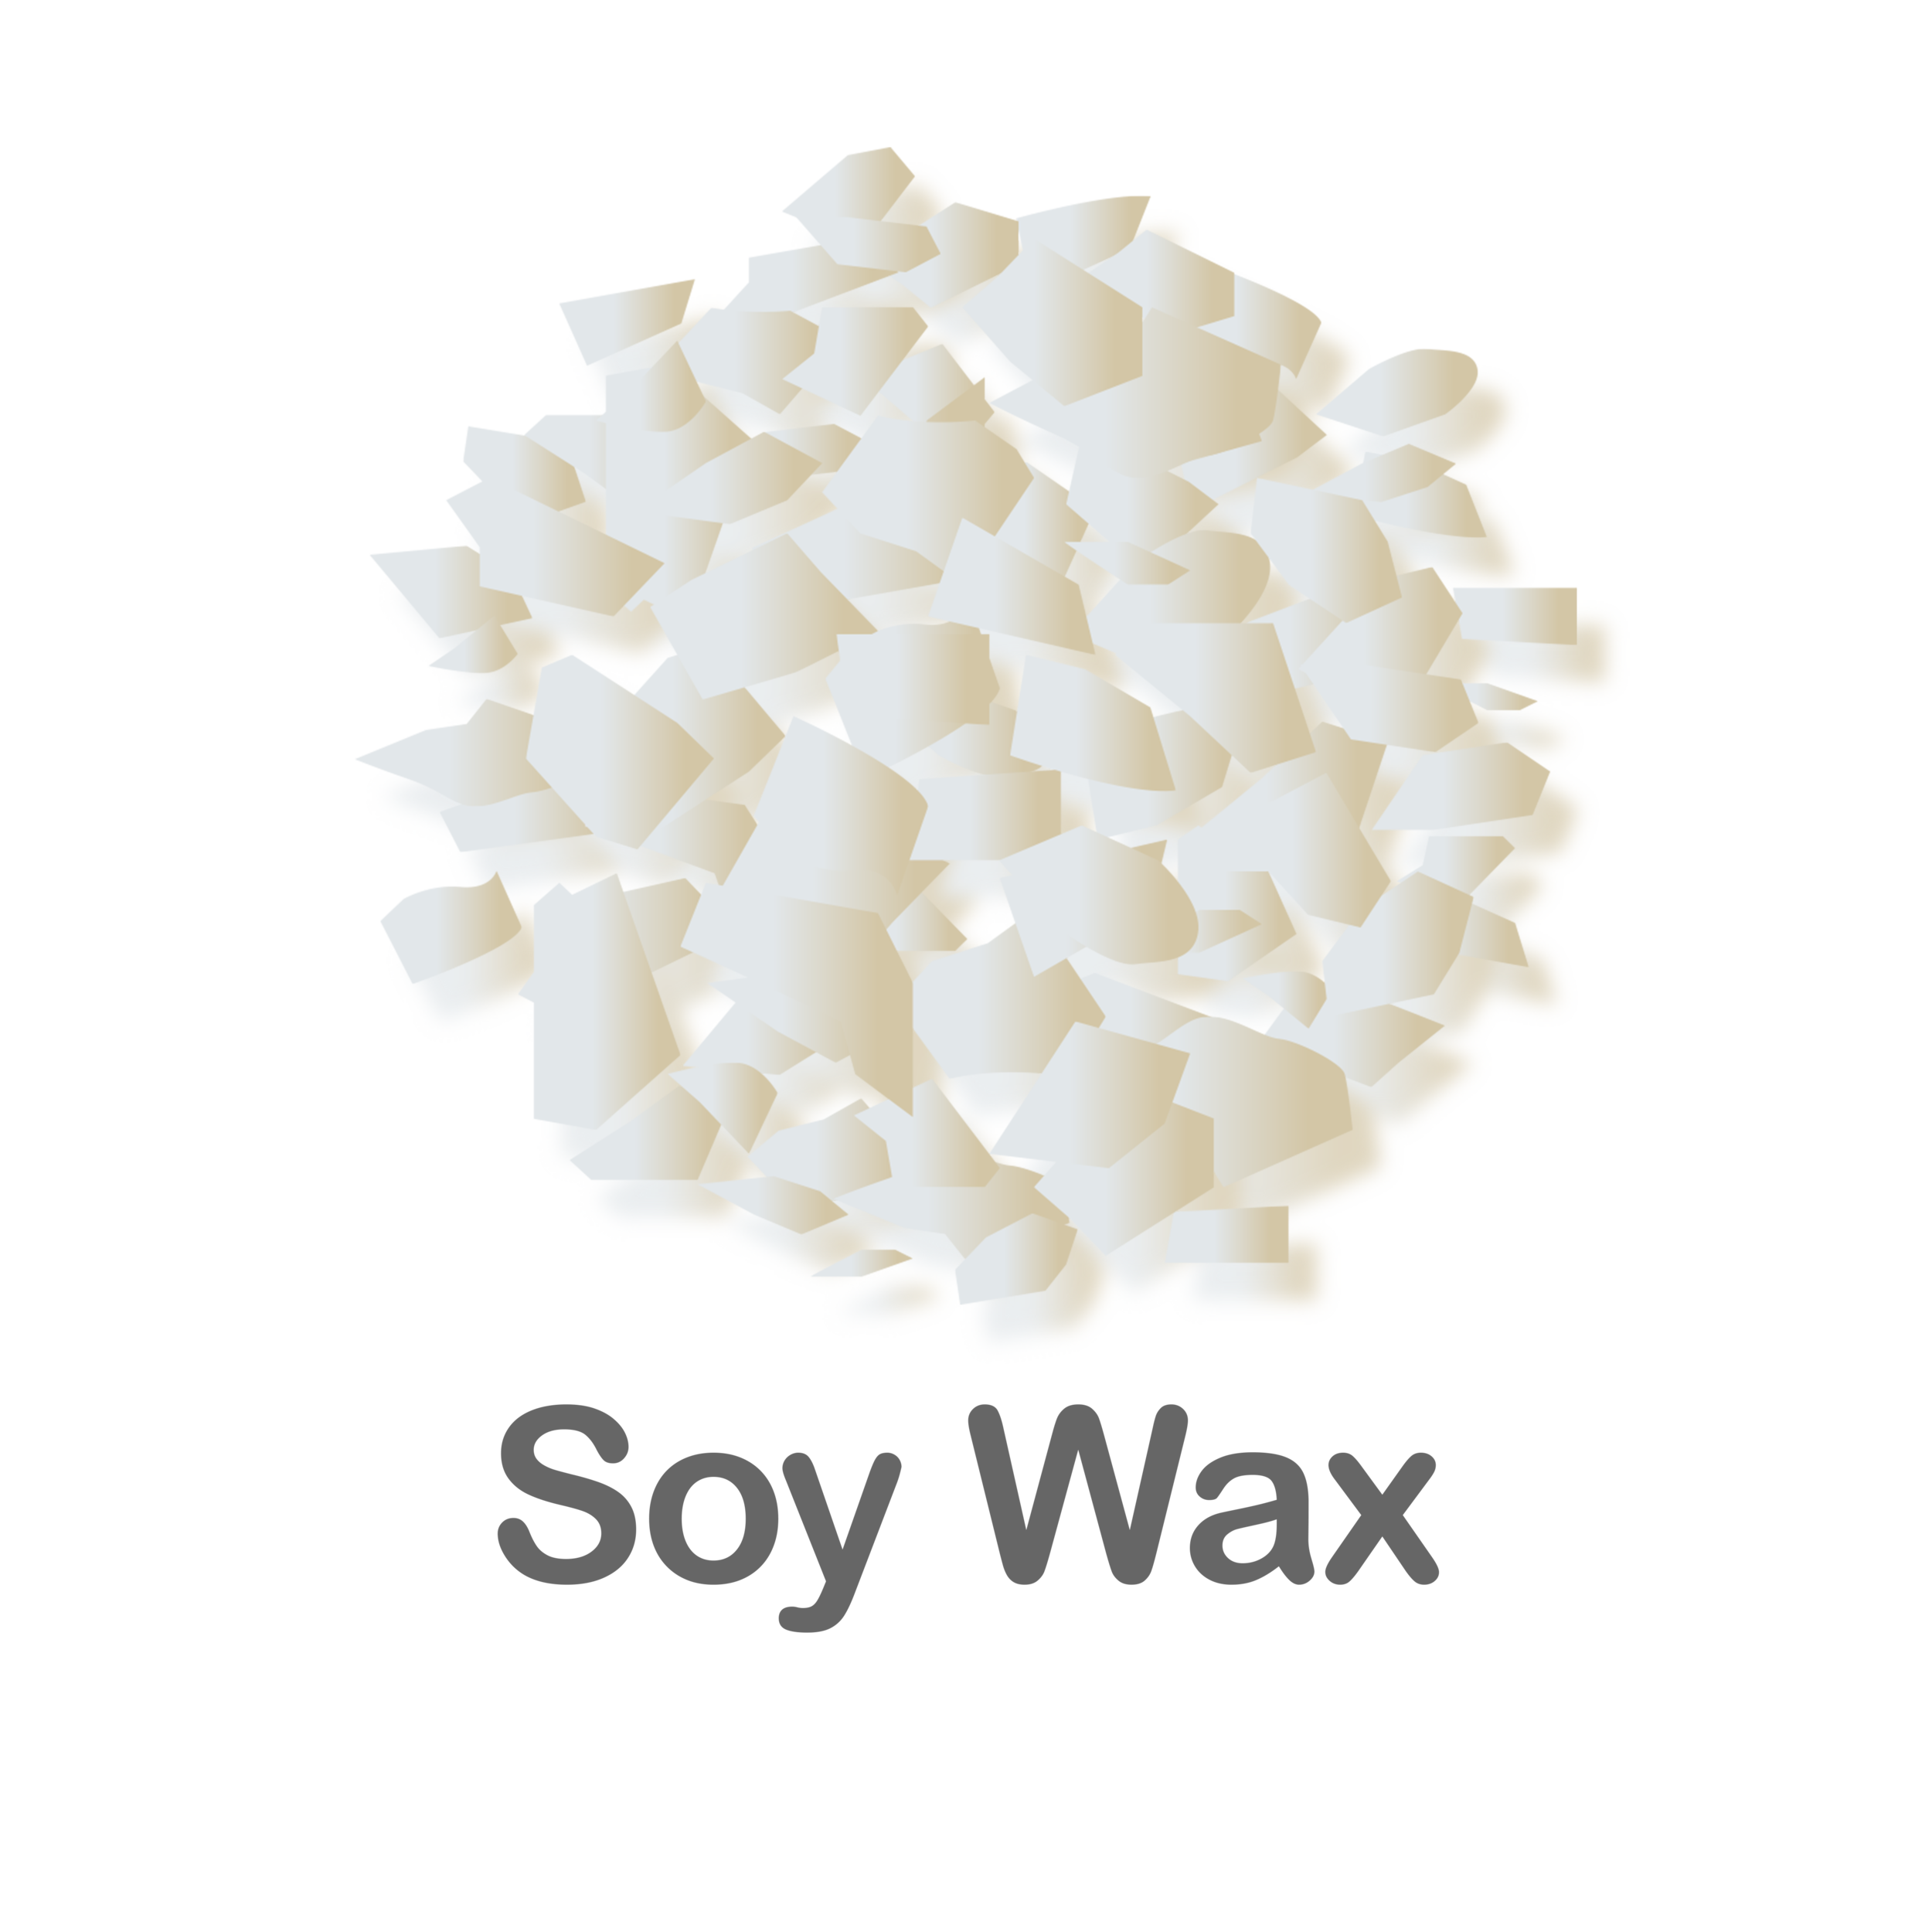 Soy Wax (Copy)